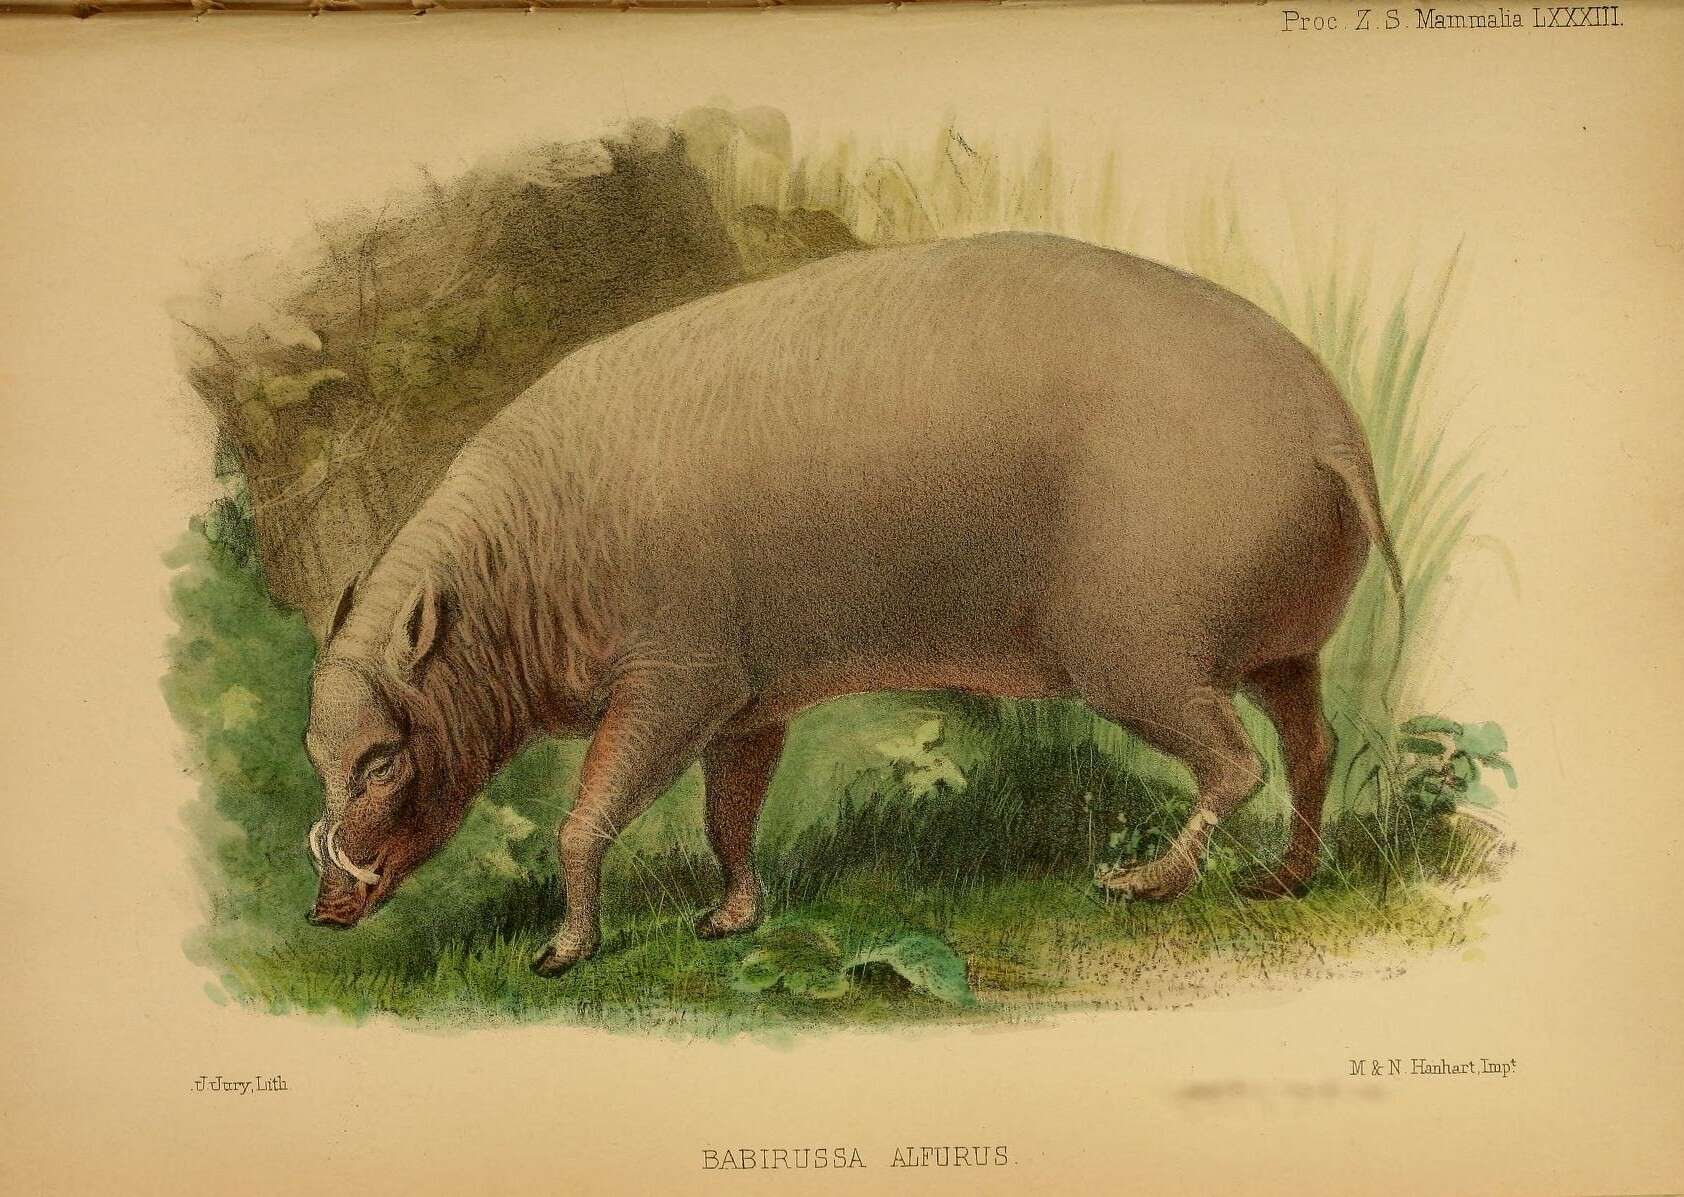 Image of babirusa